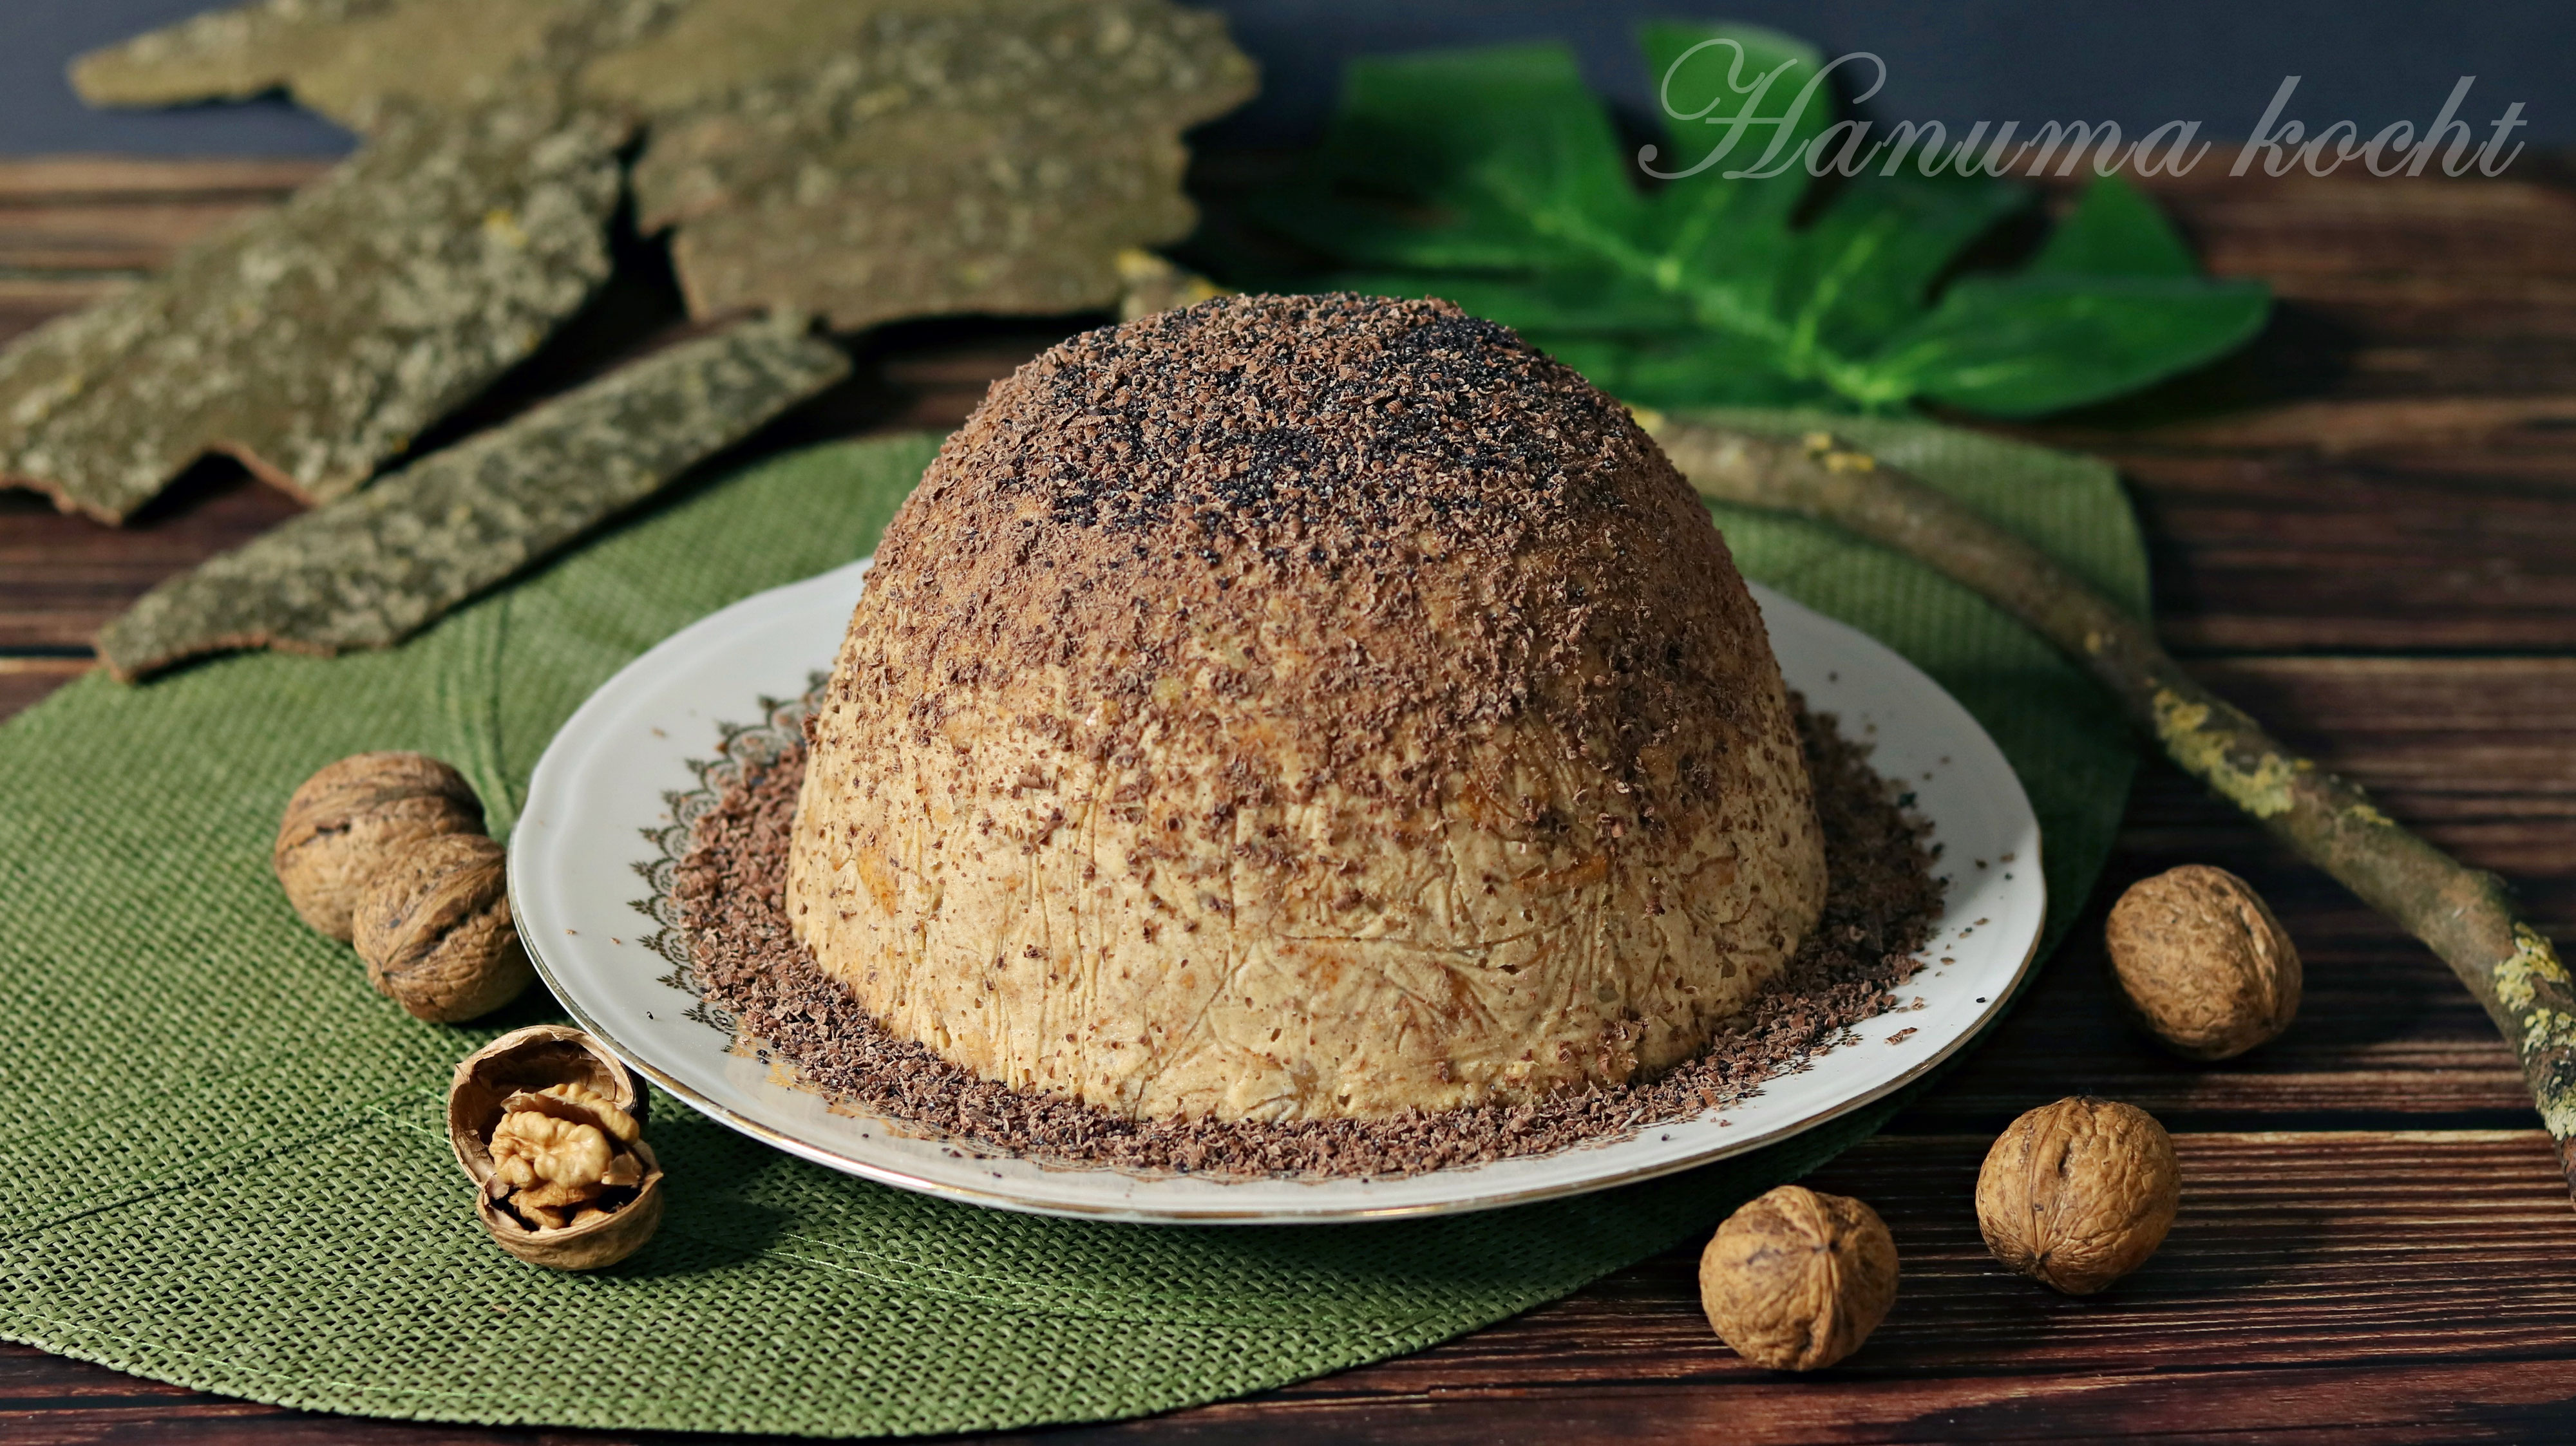 Murawejnik Torte - Russische Karamelltorte - Mravinjak torta - Karamel ...